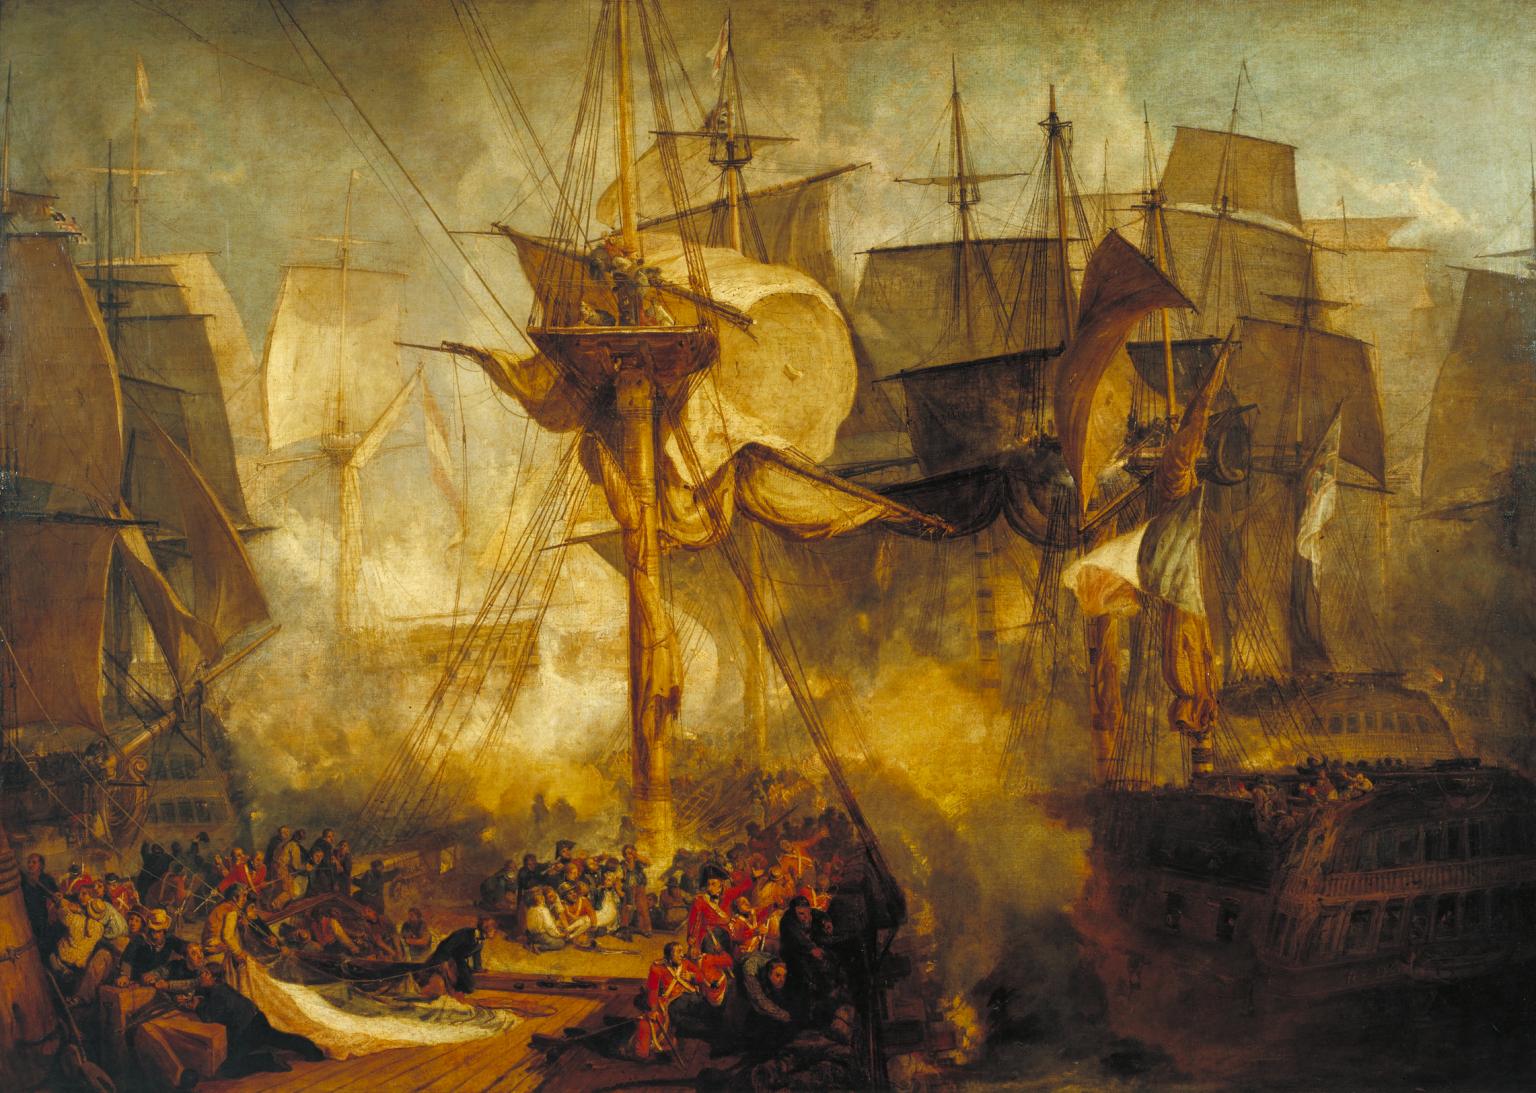 Ficheiro:Turner, The Battle of Trafalgar (1806).jpg